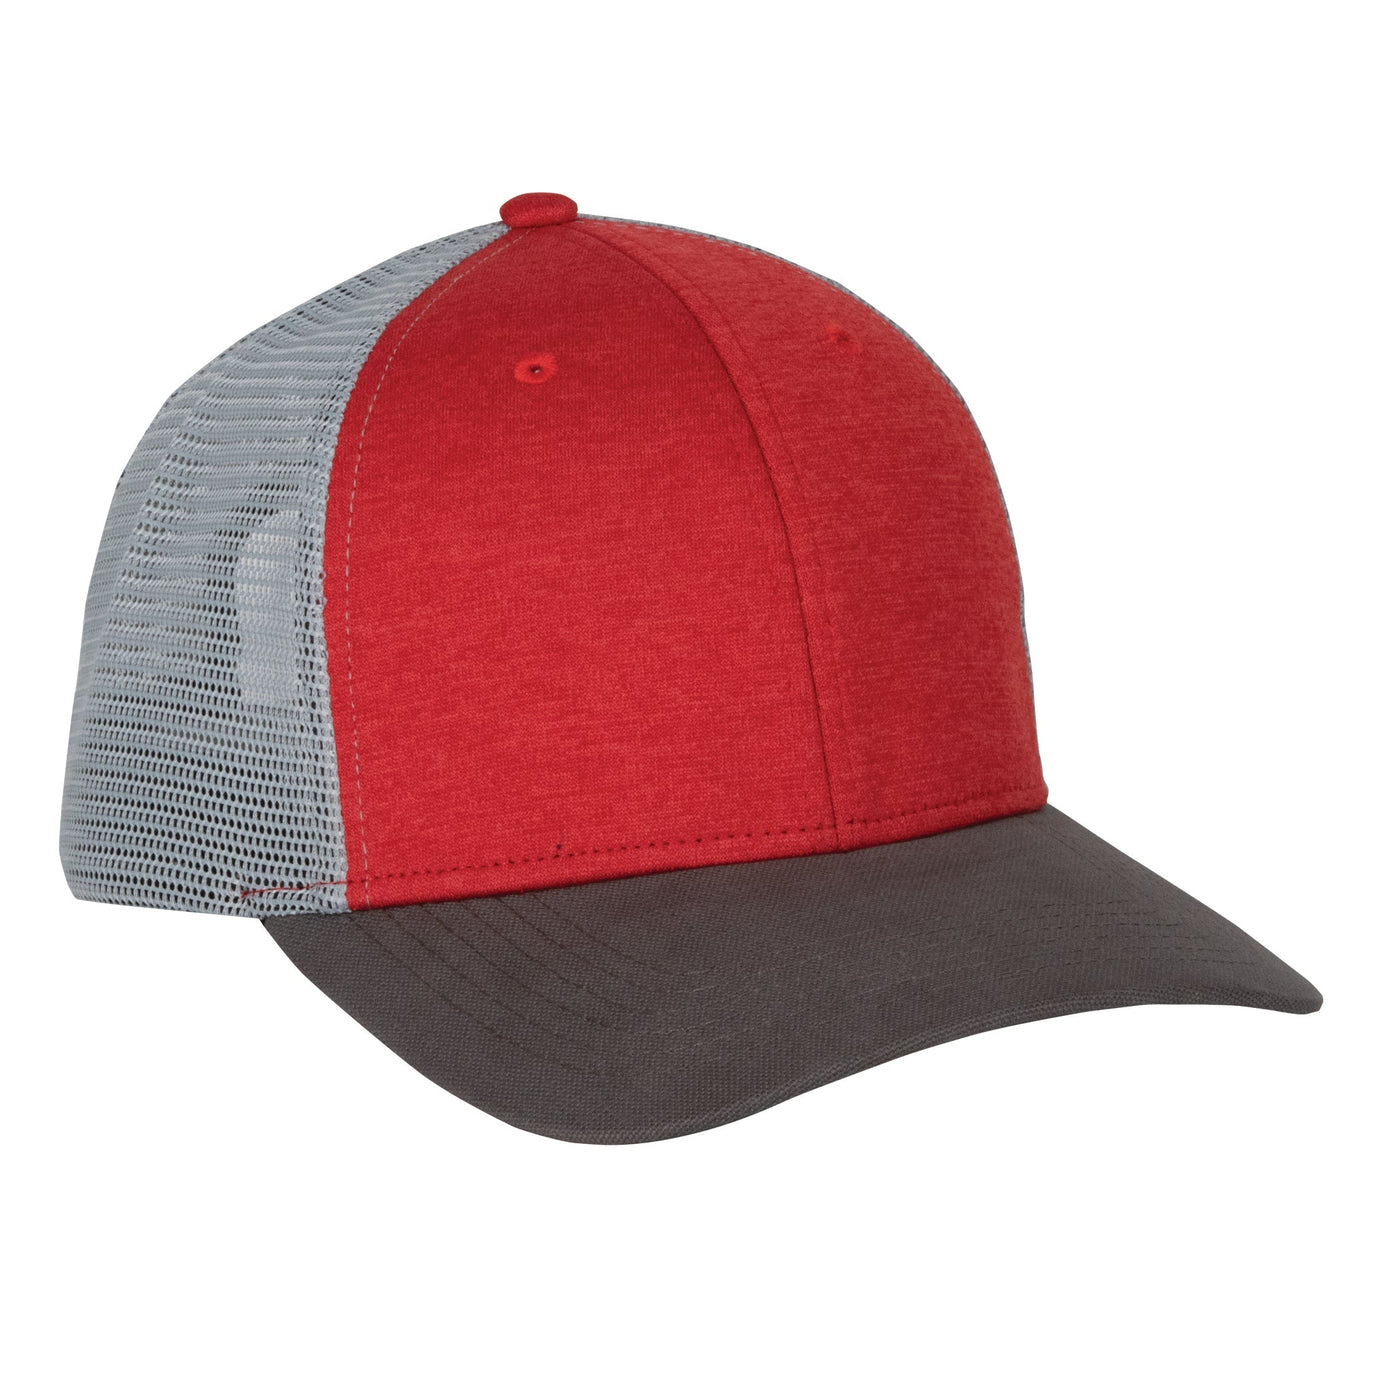 Vantage Trucker Hat – DRI DUCK